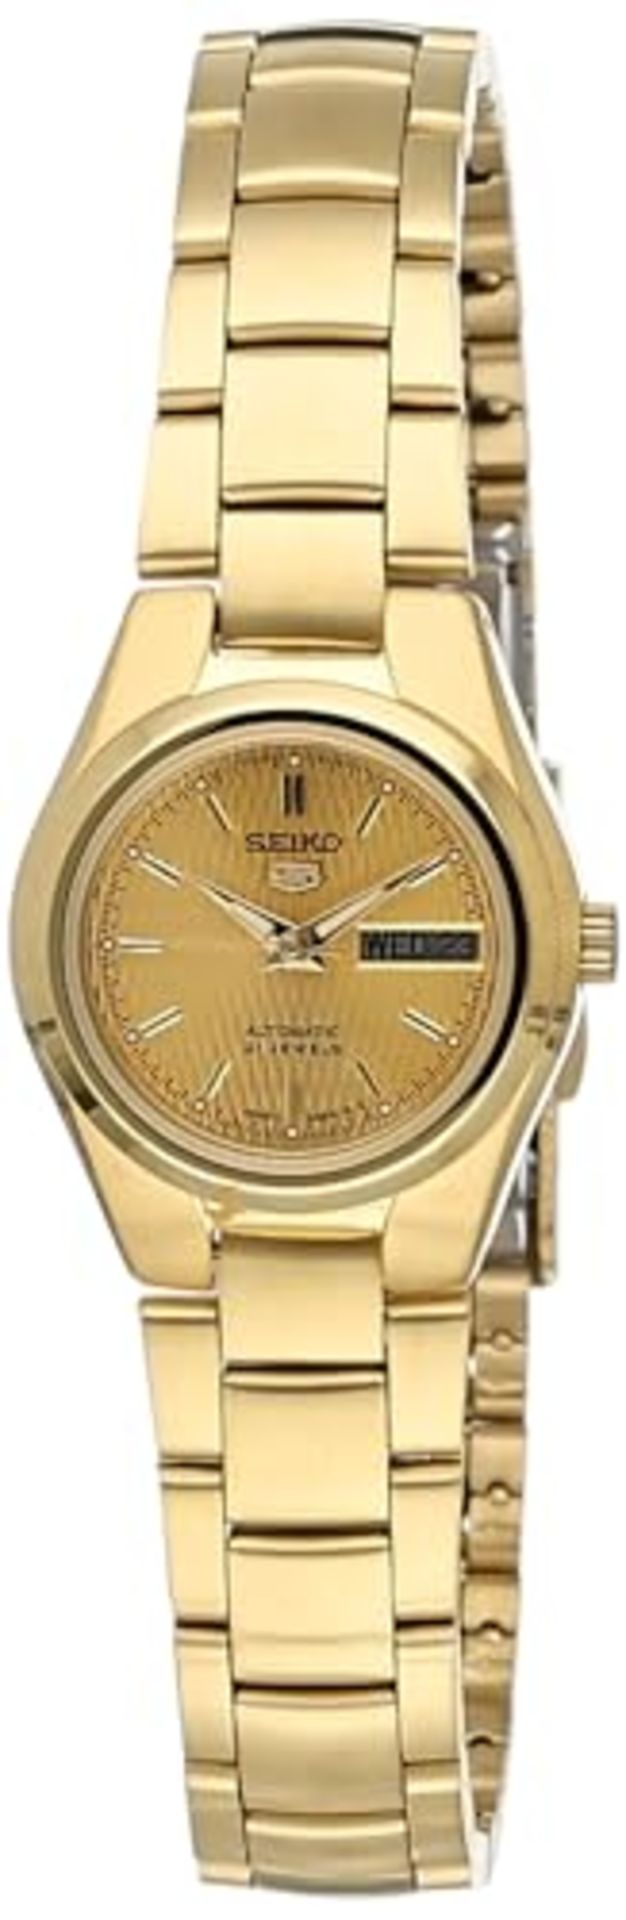 RRP £100.00 Seiko Ladies Automatic Analog Watch with Stainless Steel Bracelet SYMC18K1